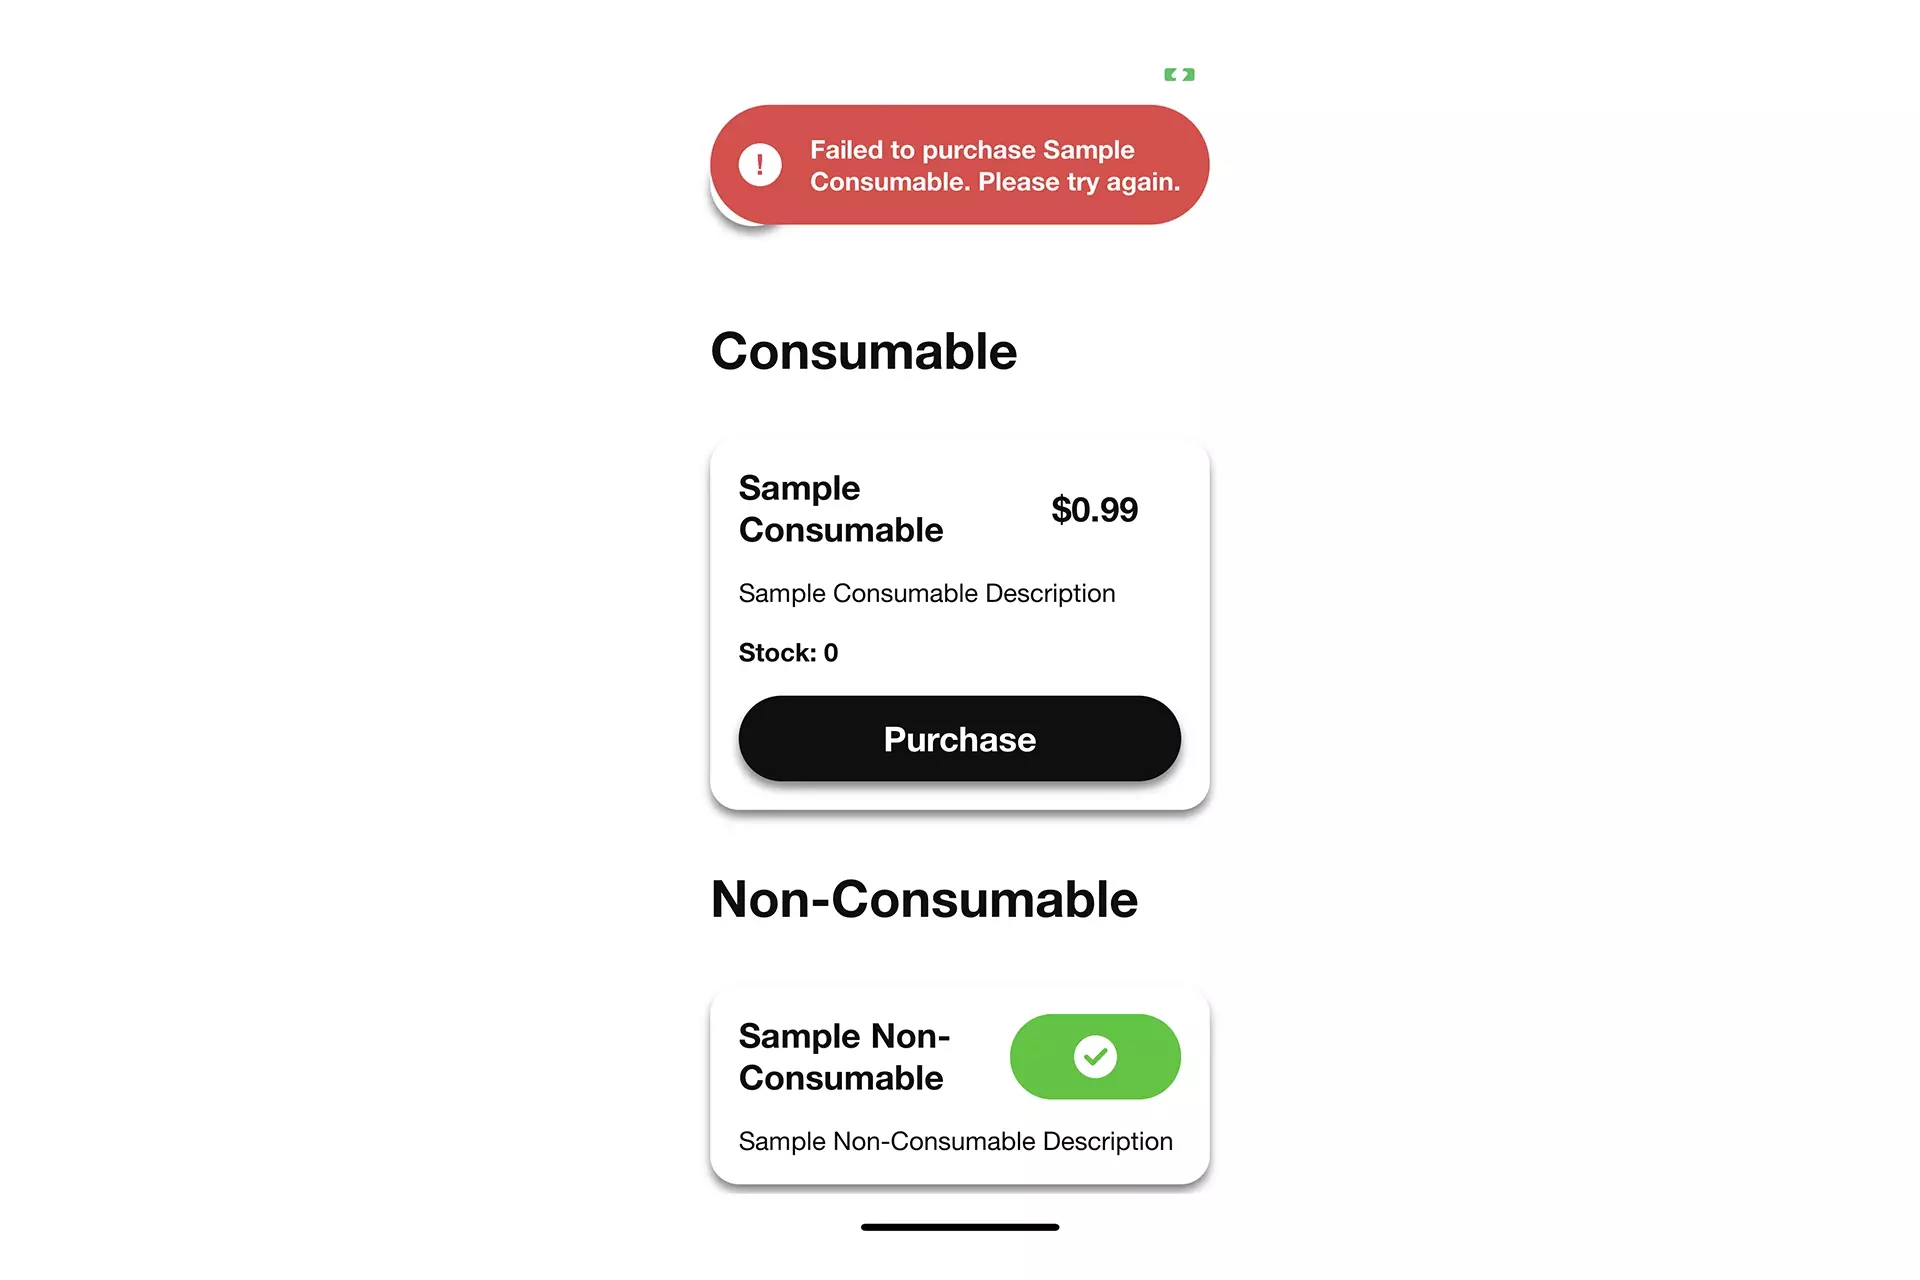 A screenshot showing a failed purchase in an iOS app.